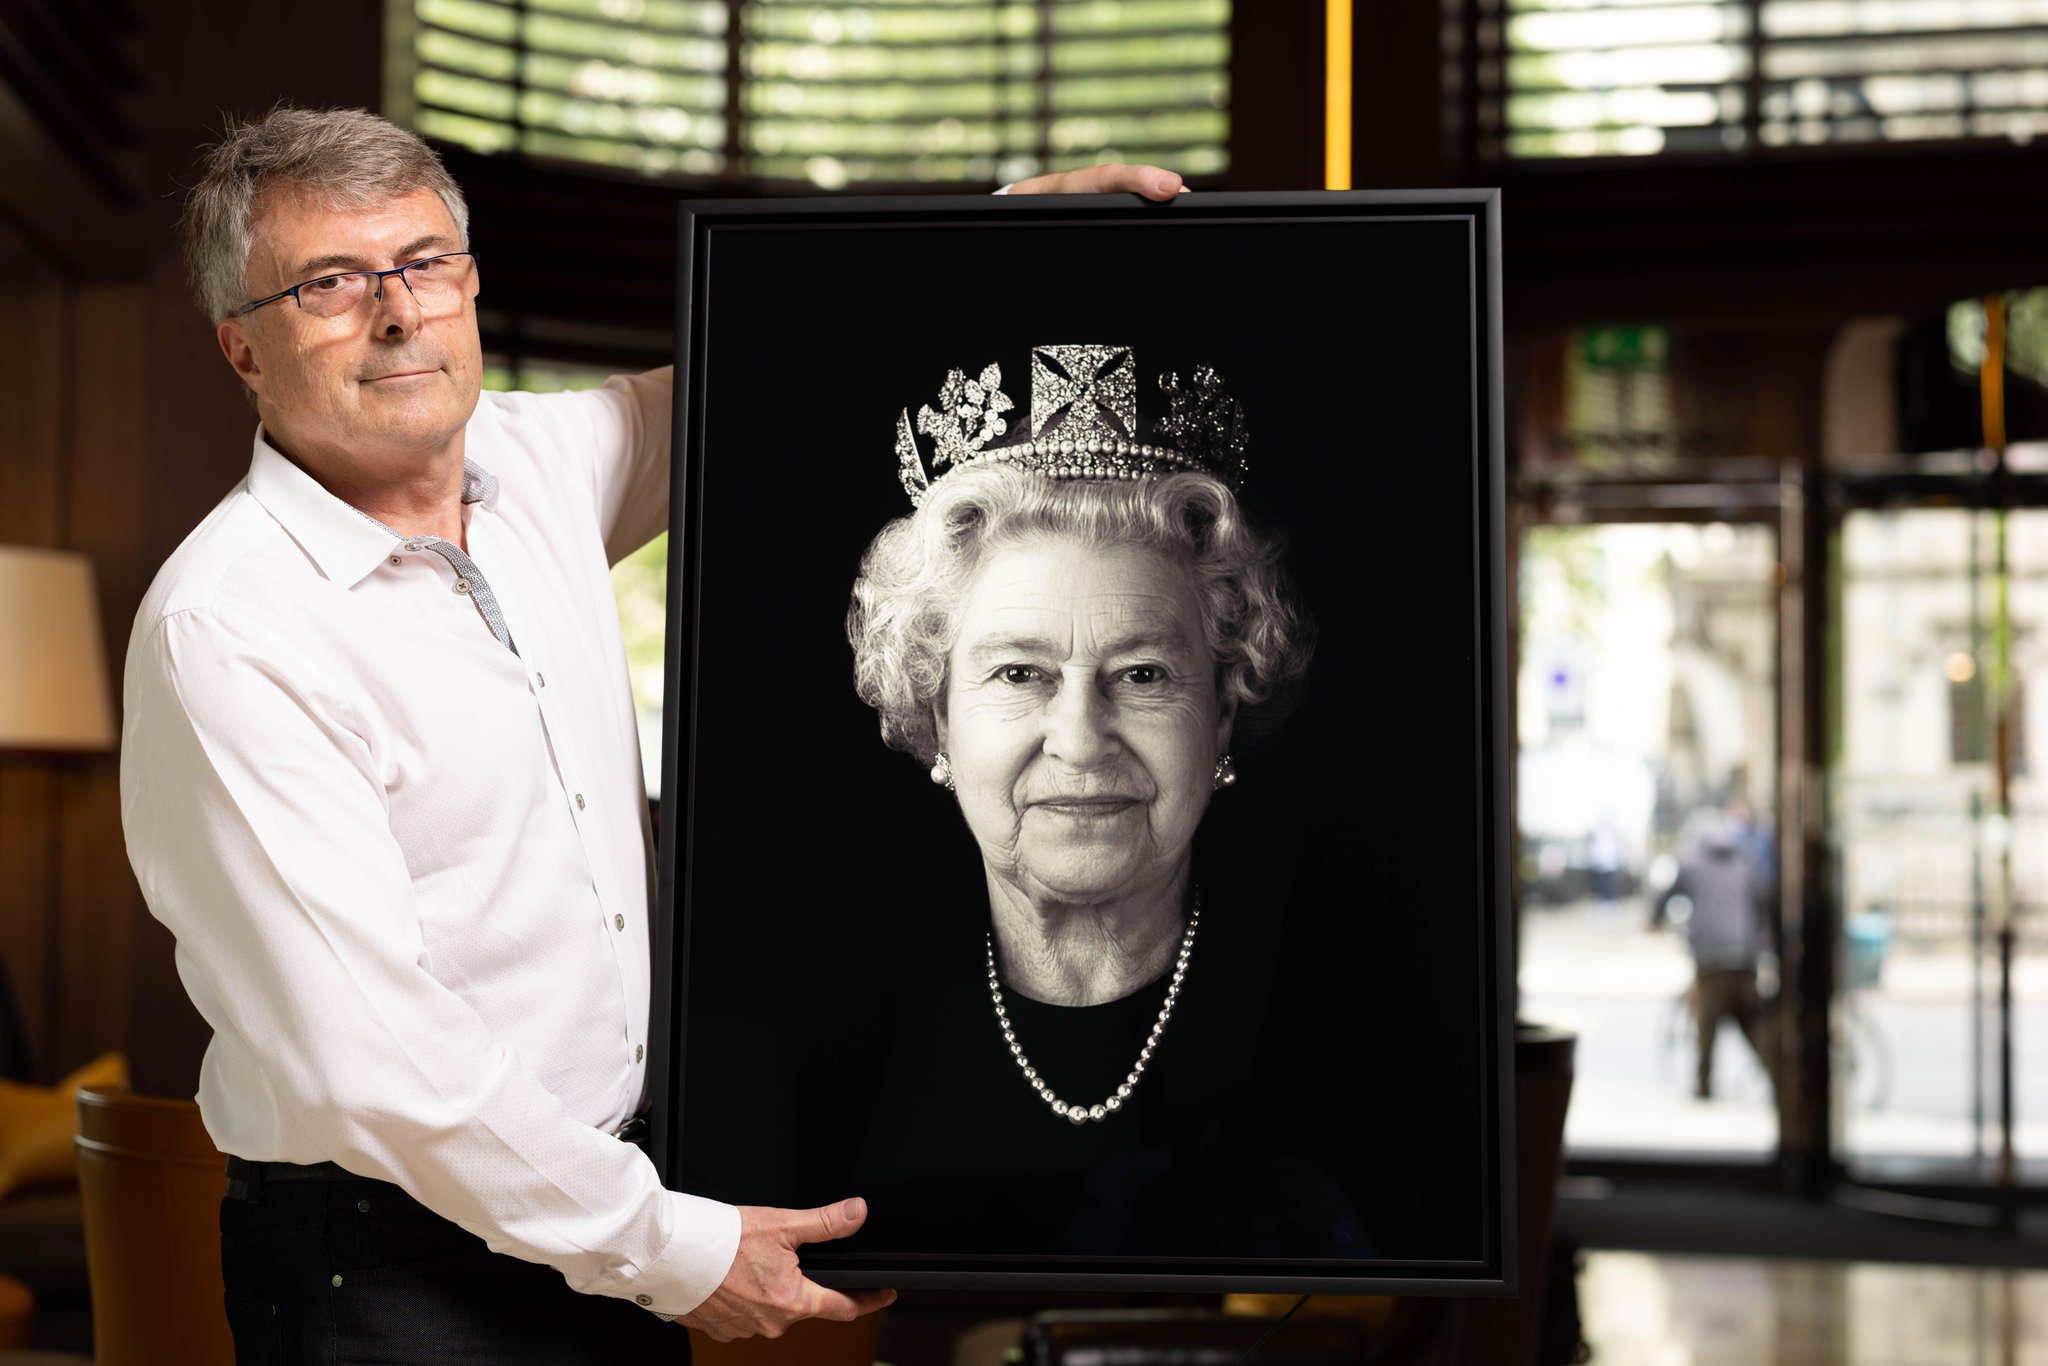 Jubilee portrait captures 'twinkle in the Queen's eye'